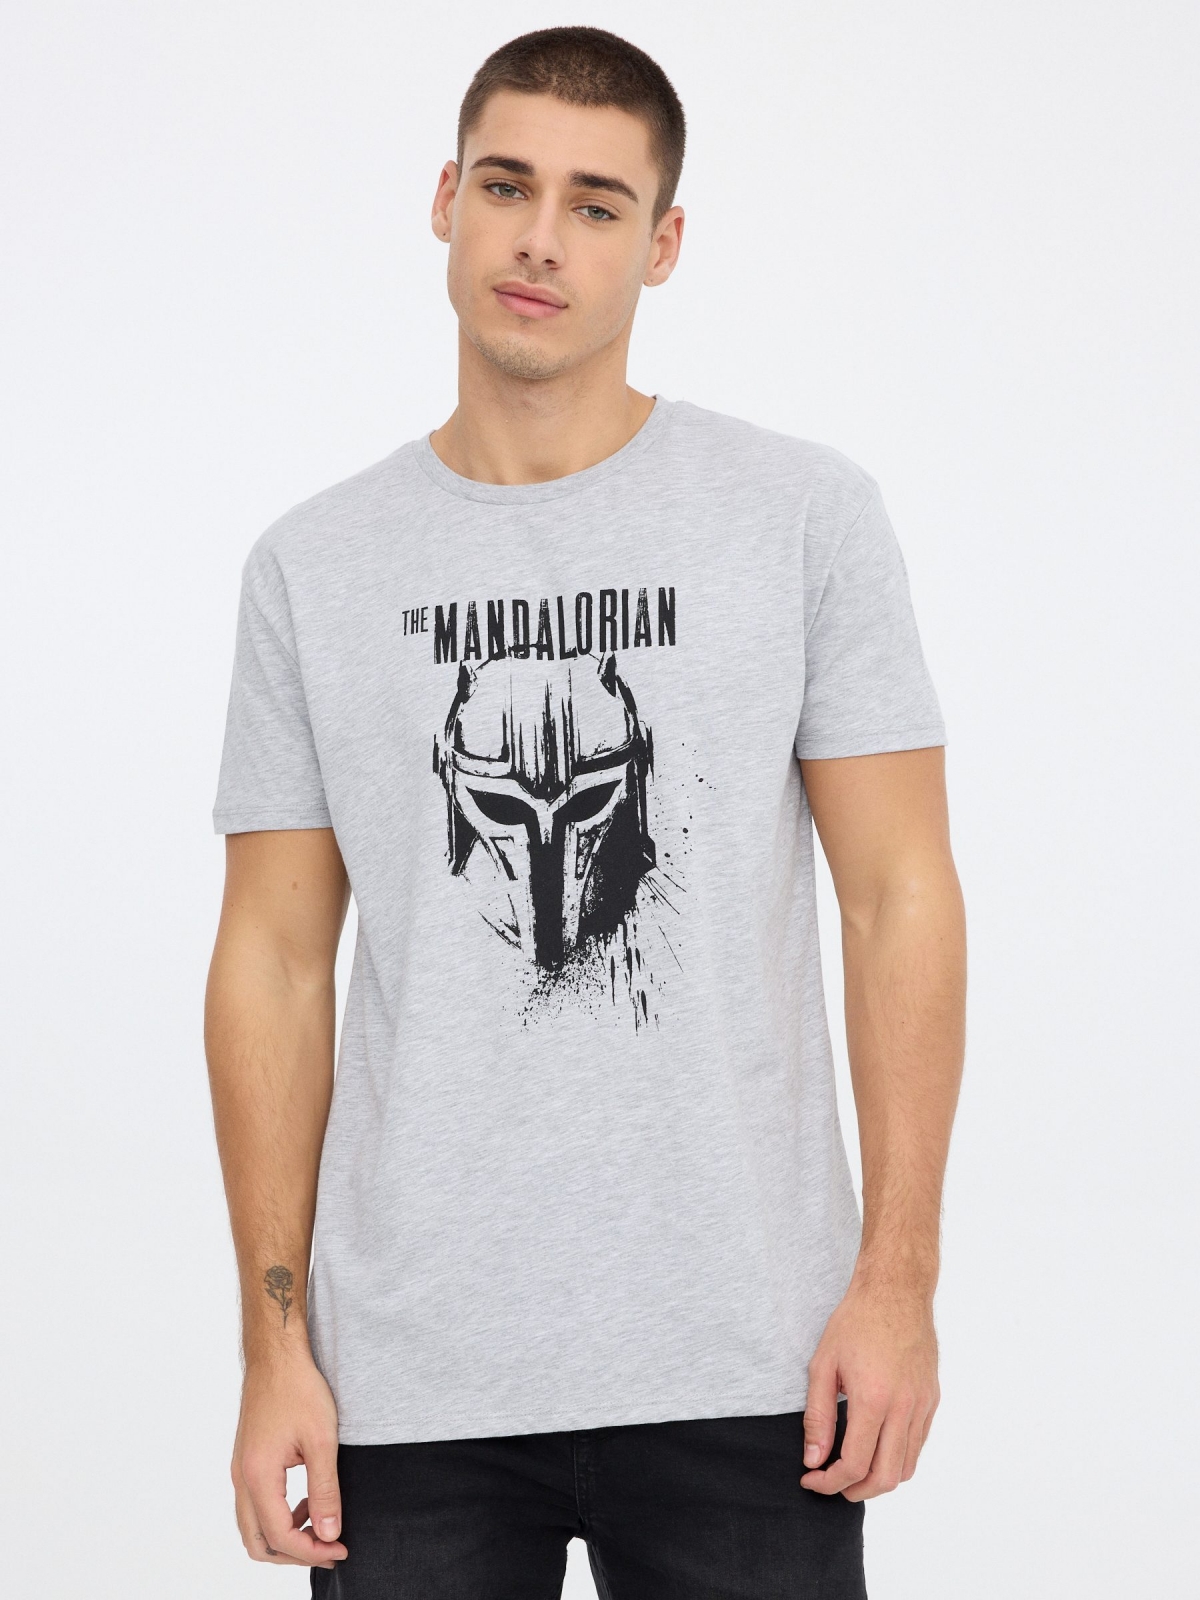 Mandalorian T-shirt grey middle front view